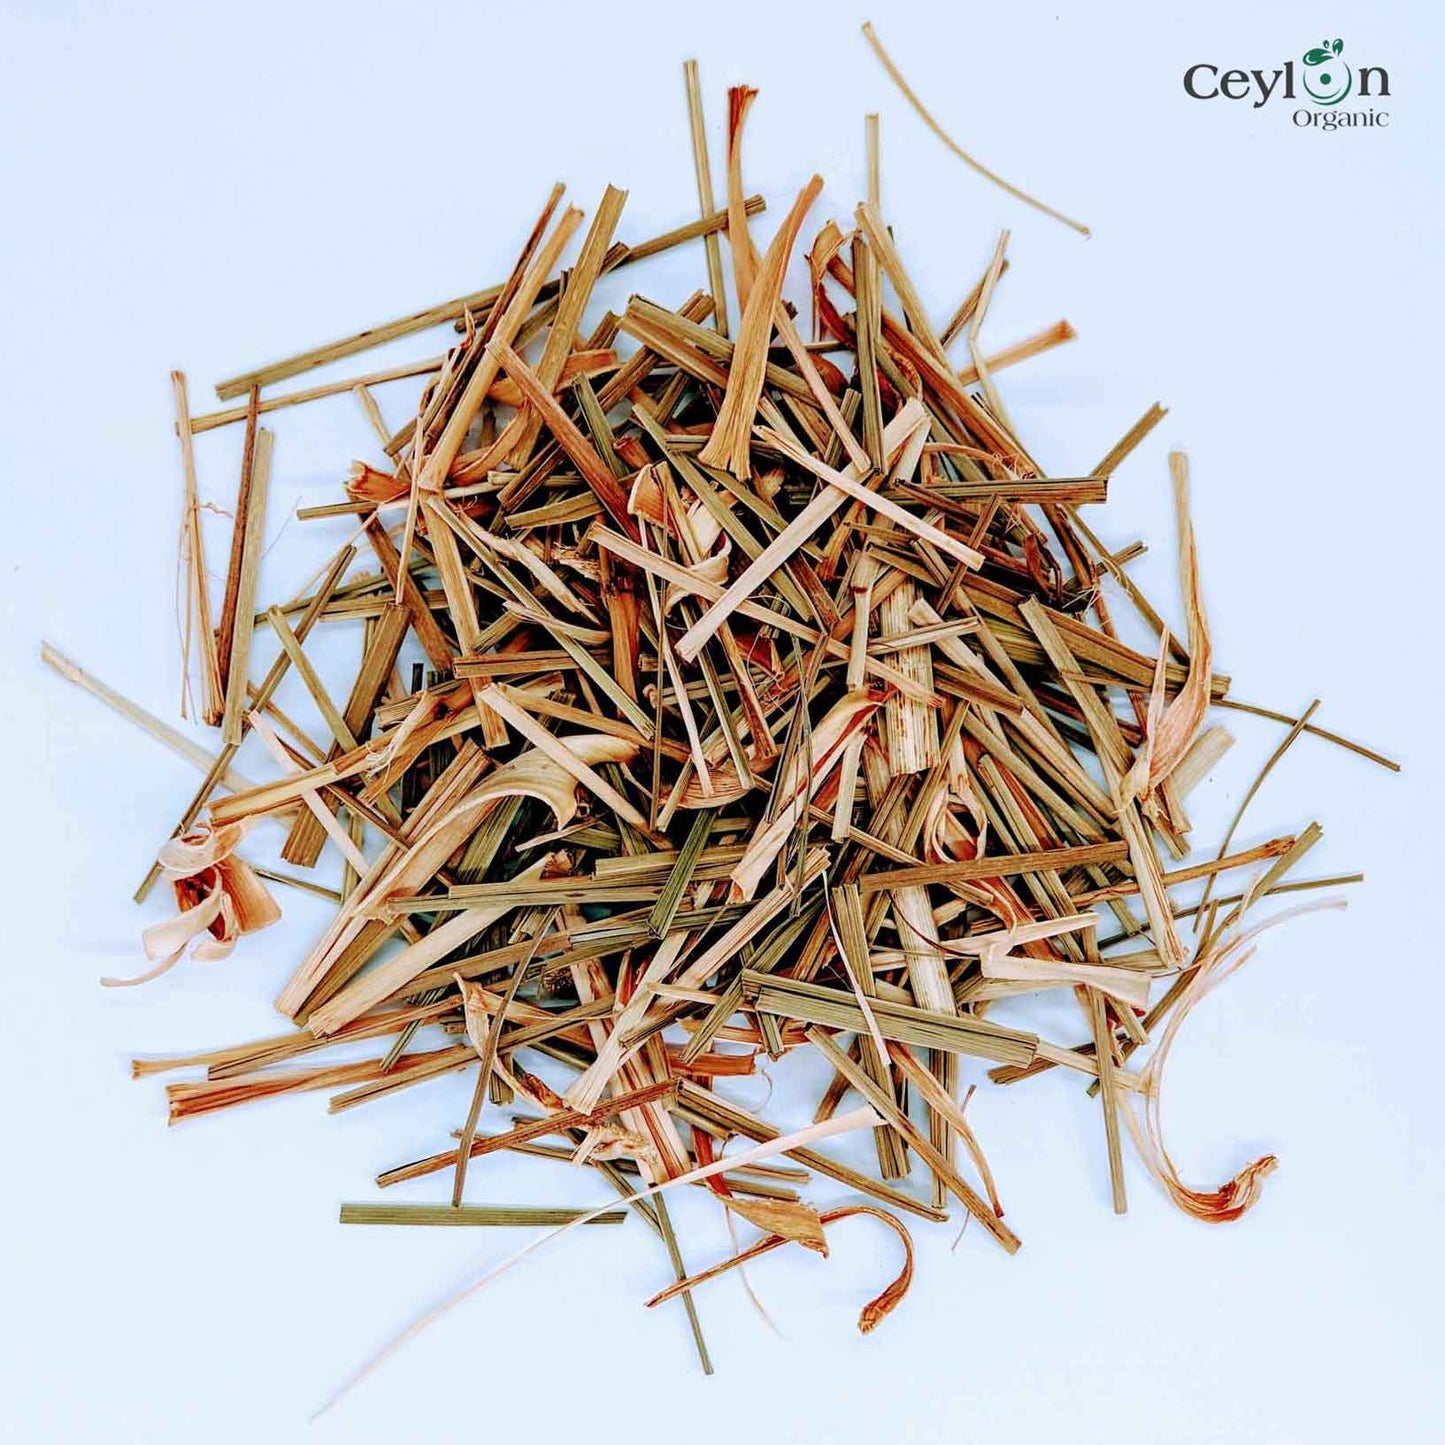 200g+  Dried Lemongrass 100% Organic | Ceylon organic-6